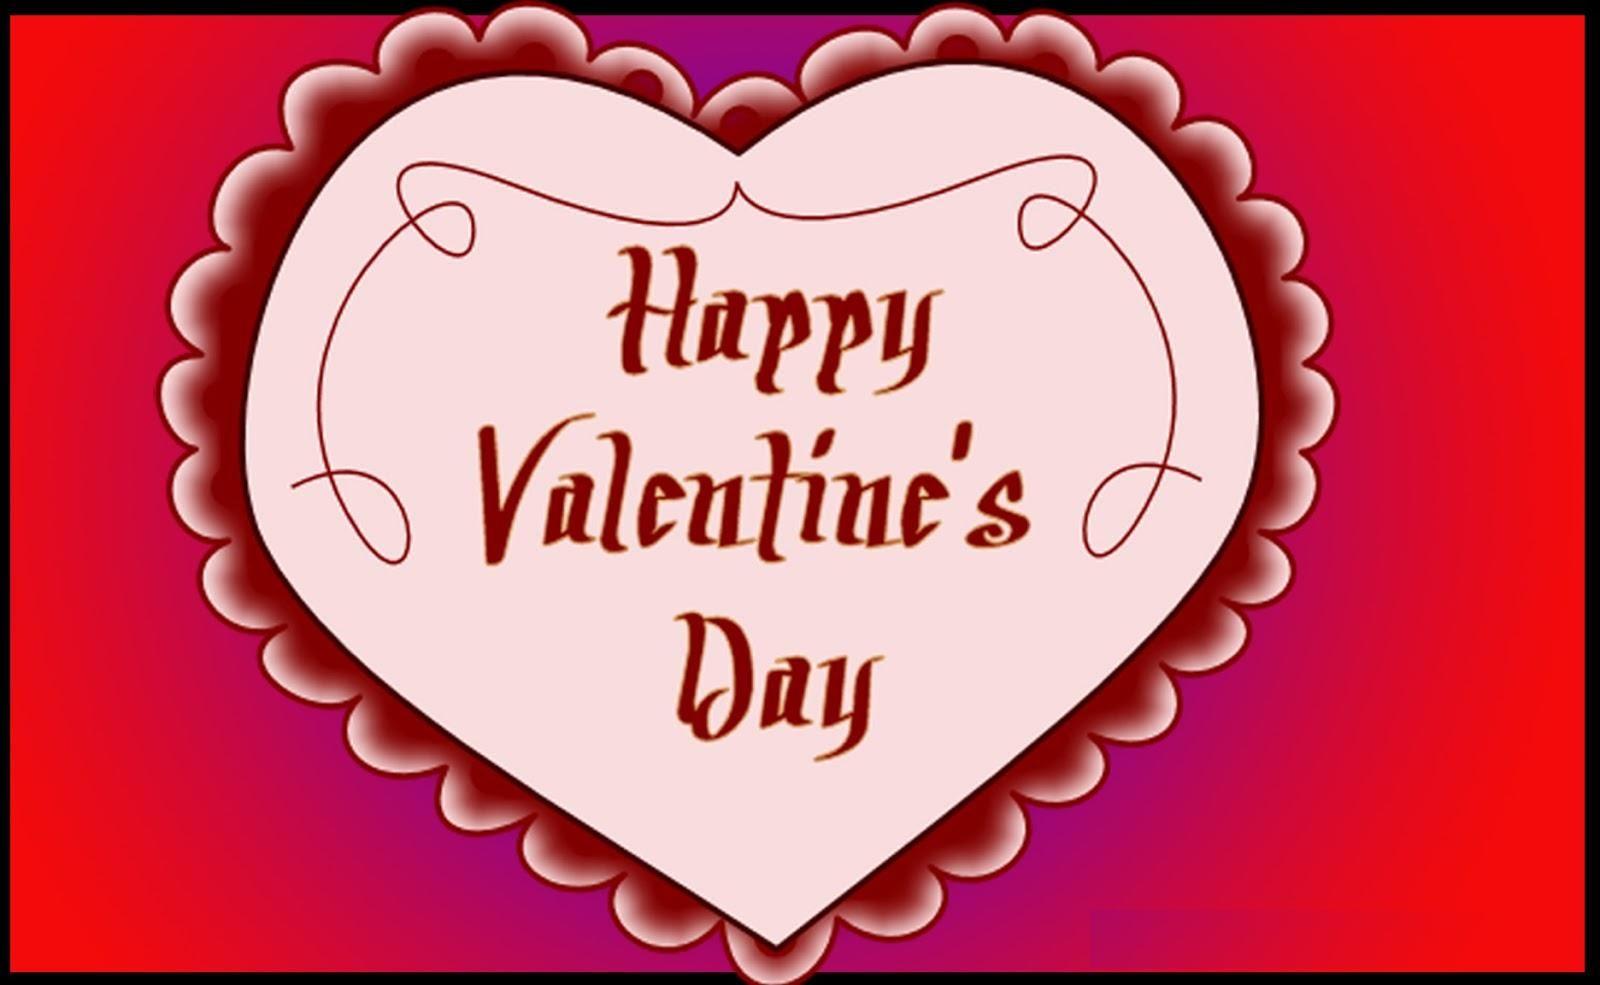 Happy Valentine's Day love 2019